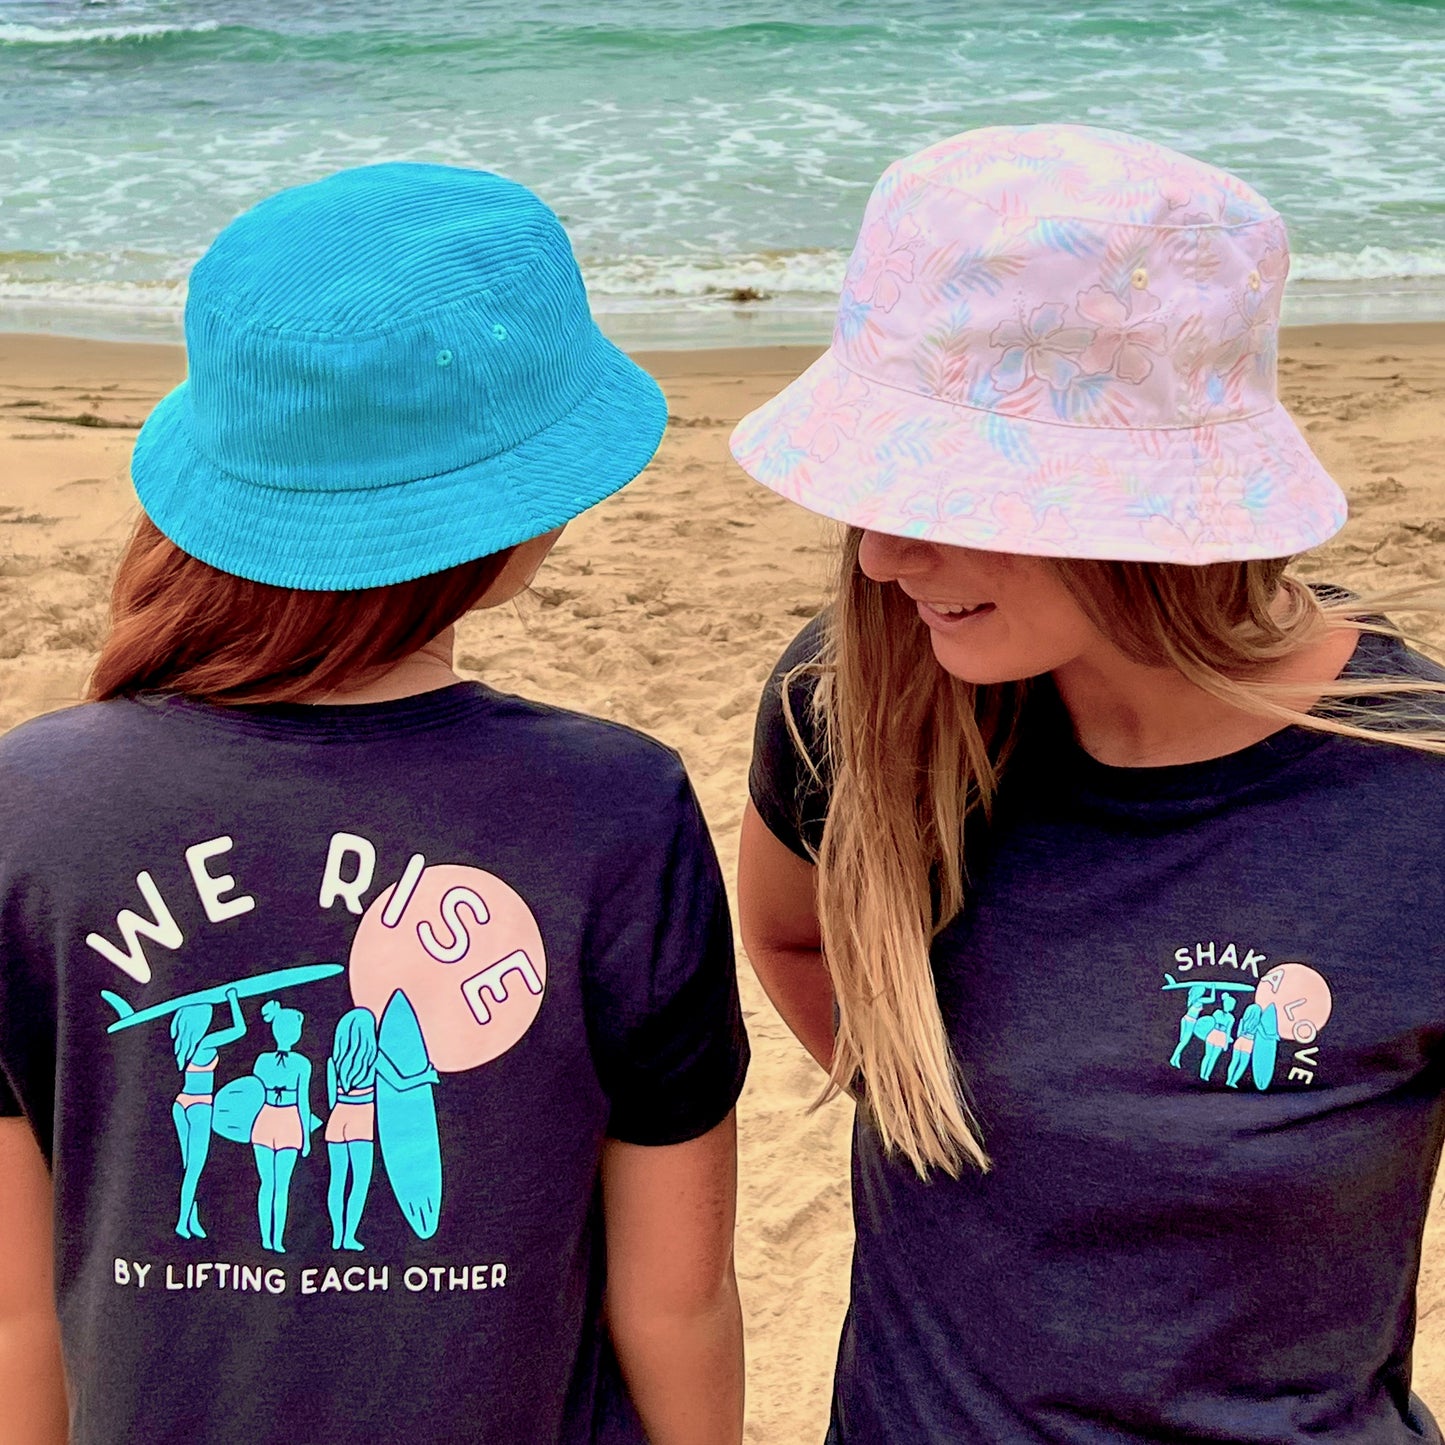 Shaka Surfer Girls "We Rise" T-shirt - Dark Charcoal, Short Sleeve